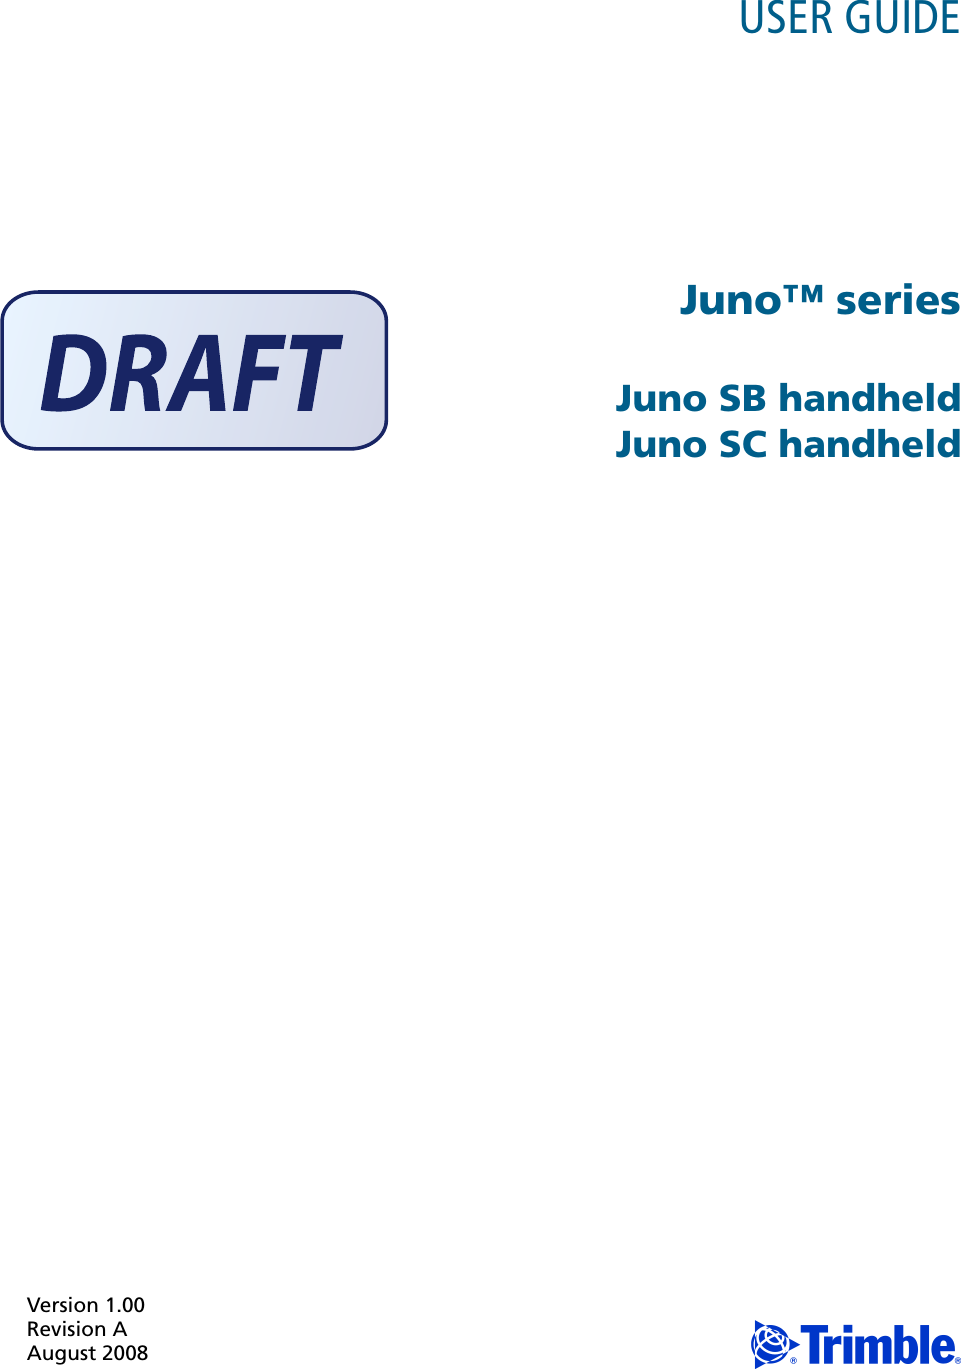 Version 1.00Revision AAugust 2008 FUSER GUIDE Juno™ seriesJuno SB handheldJuno SC handheld